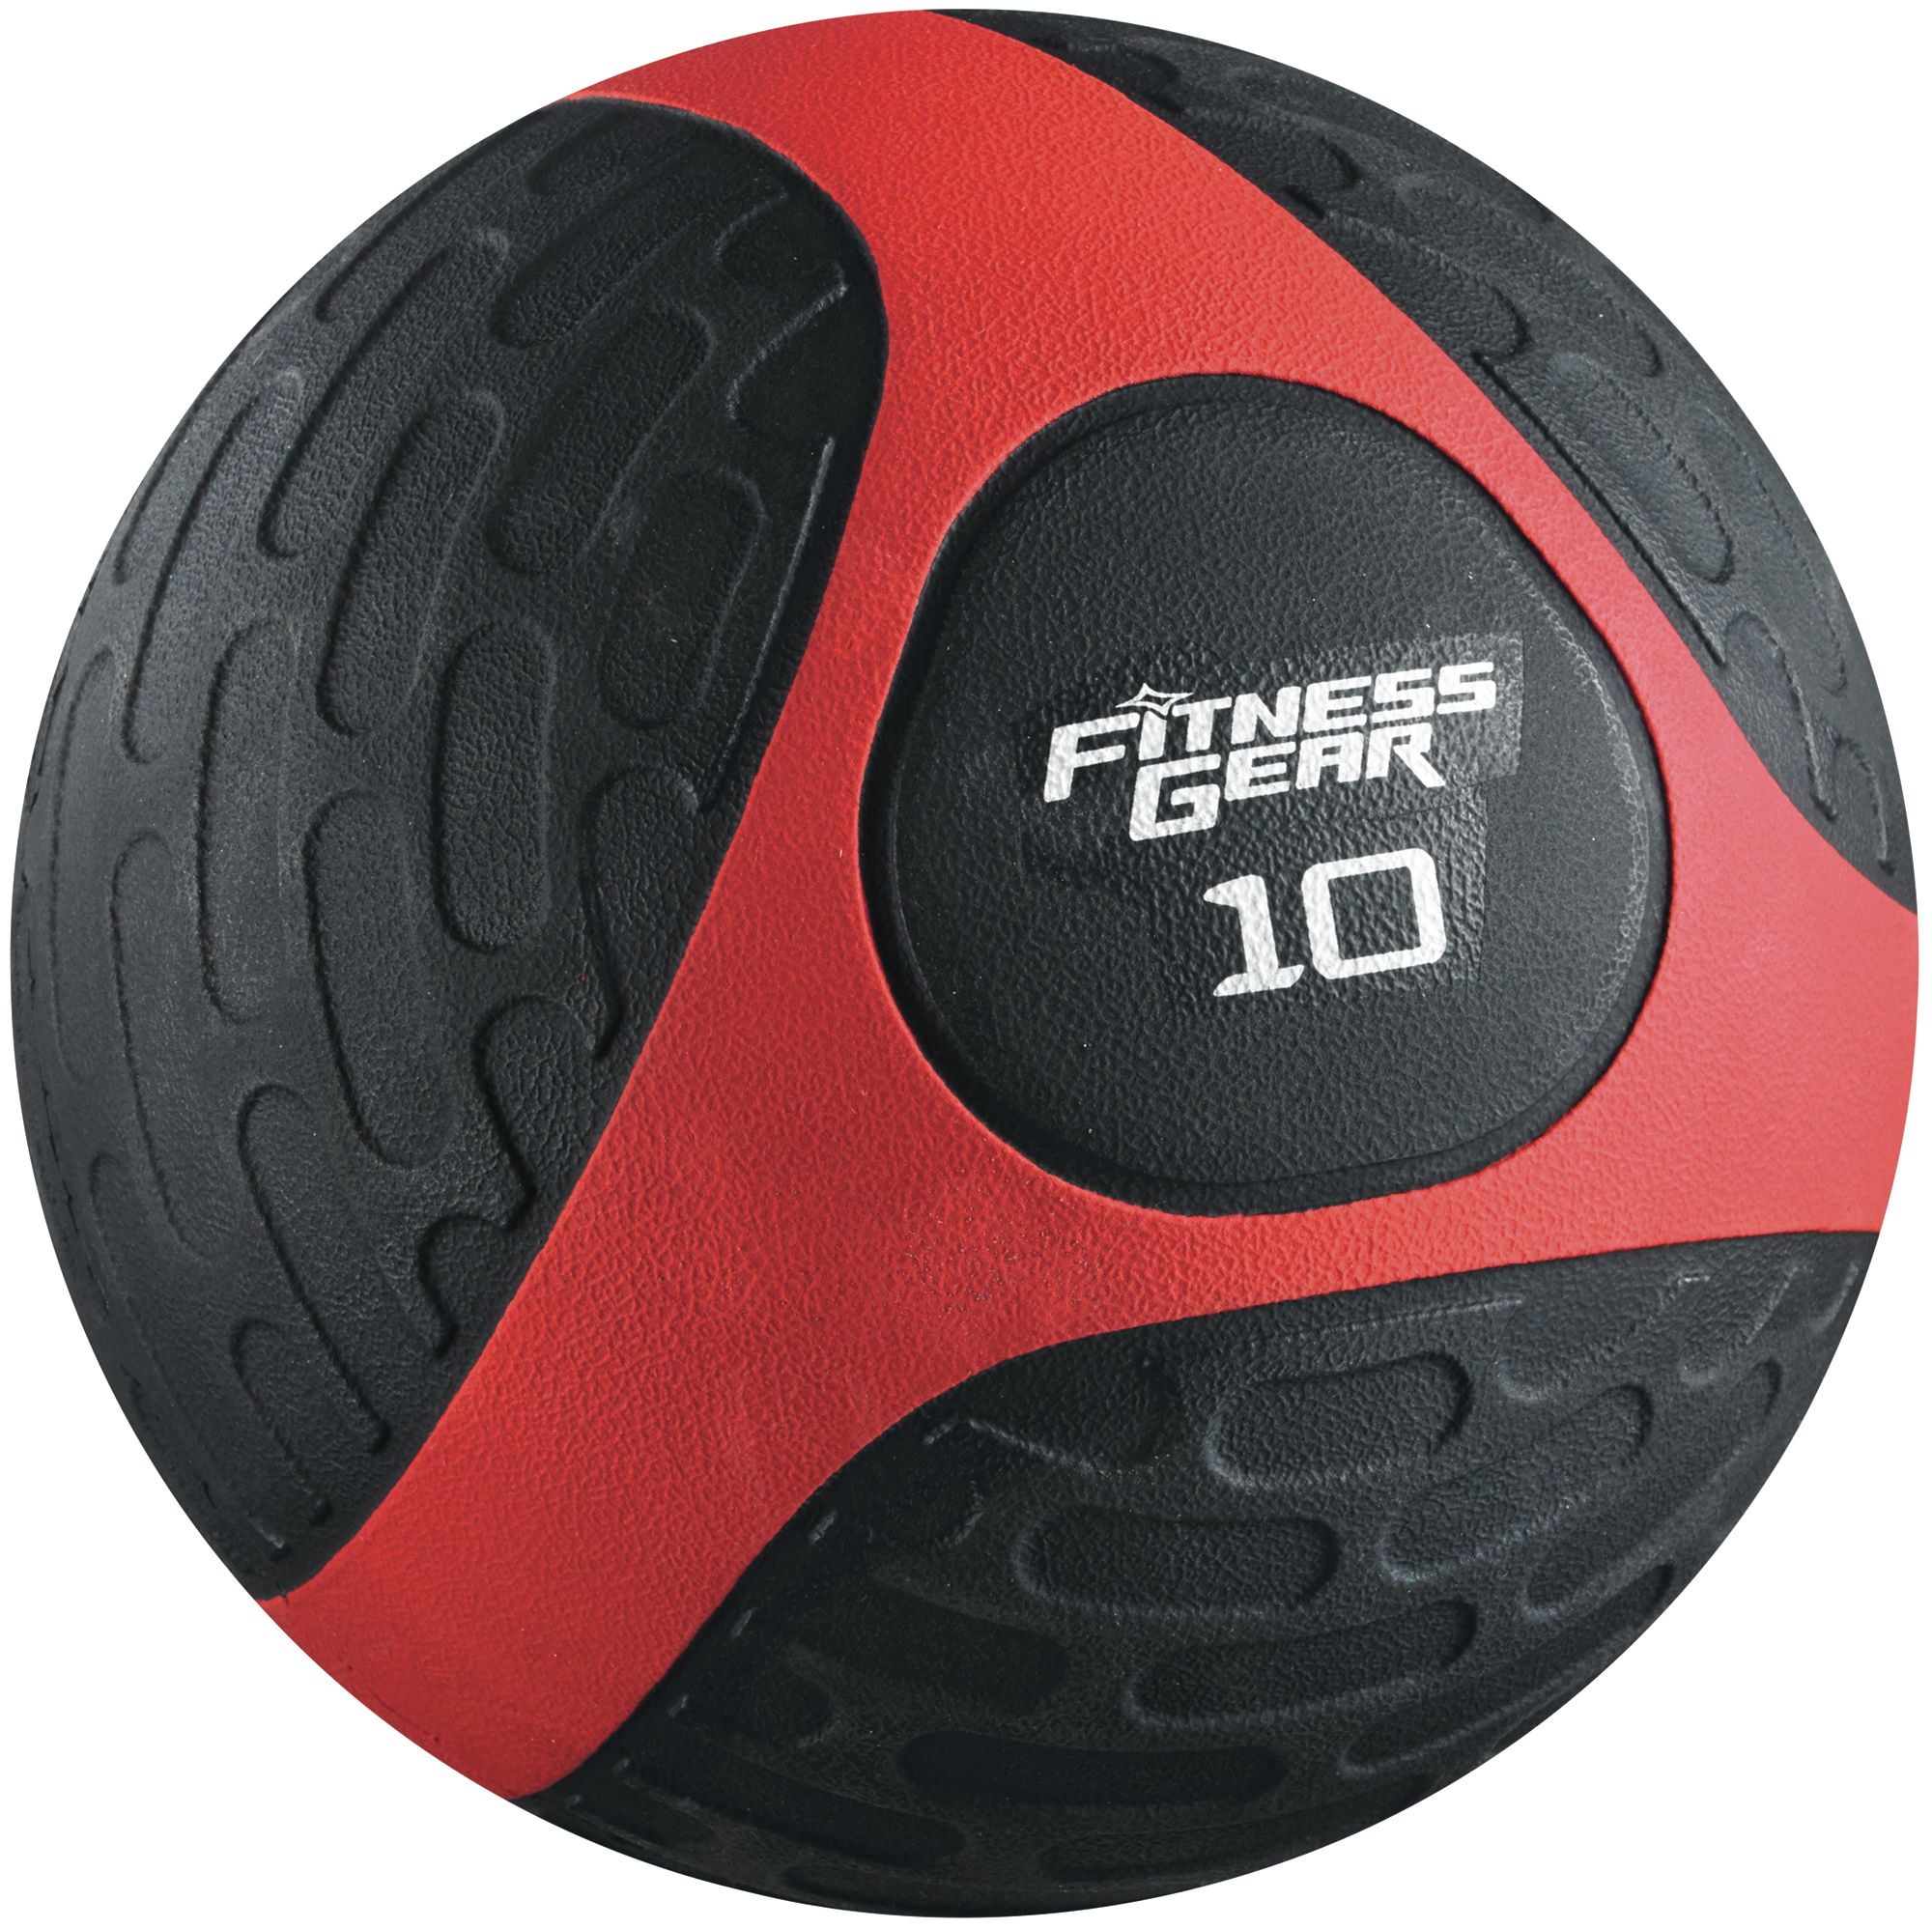 fitness gear stability ball